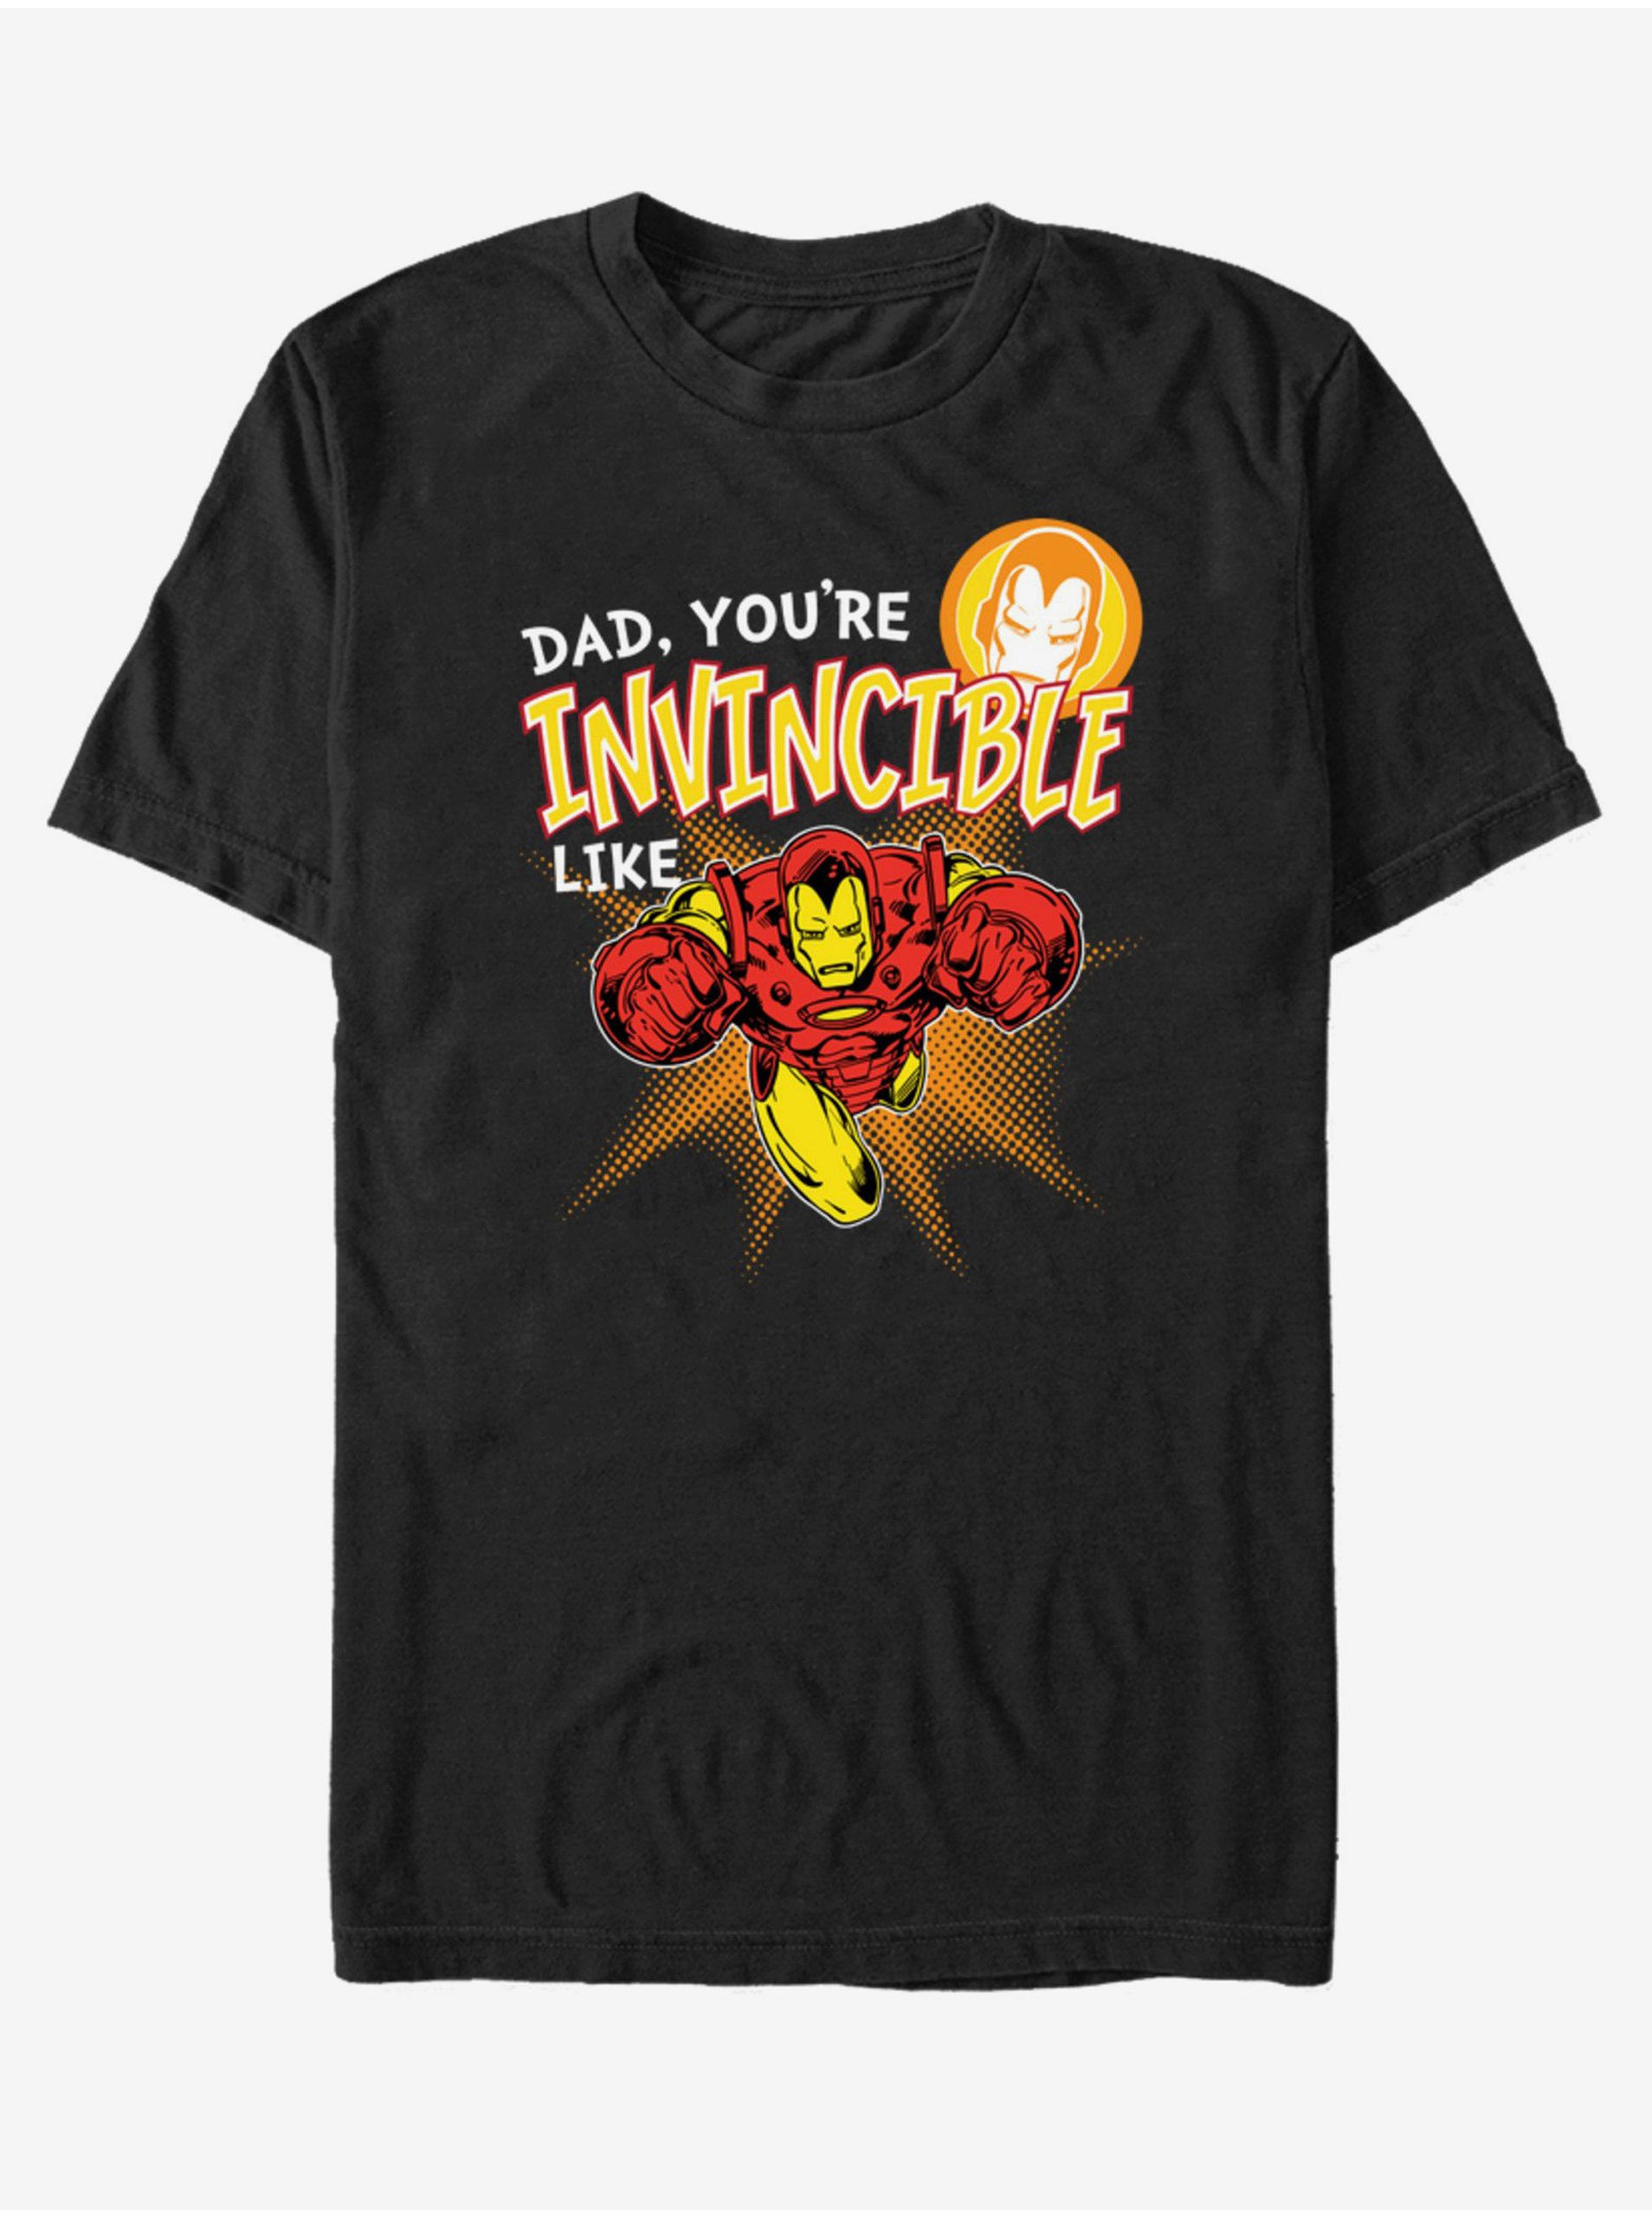 Lacno Černé unisex tričko ZOOT.Fan Marvel Invincible like Dad